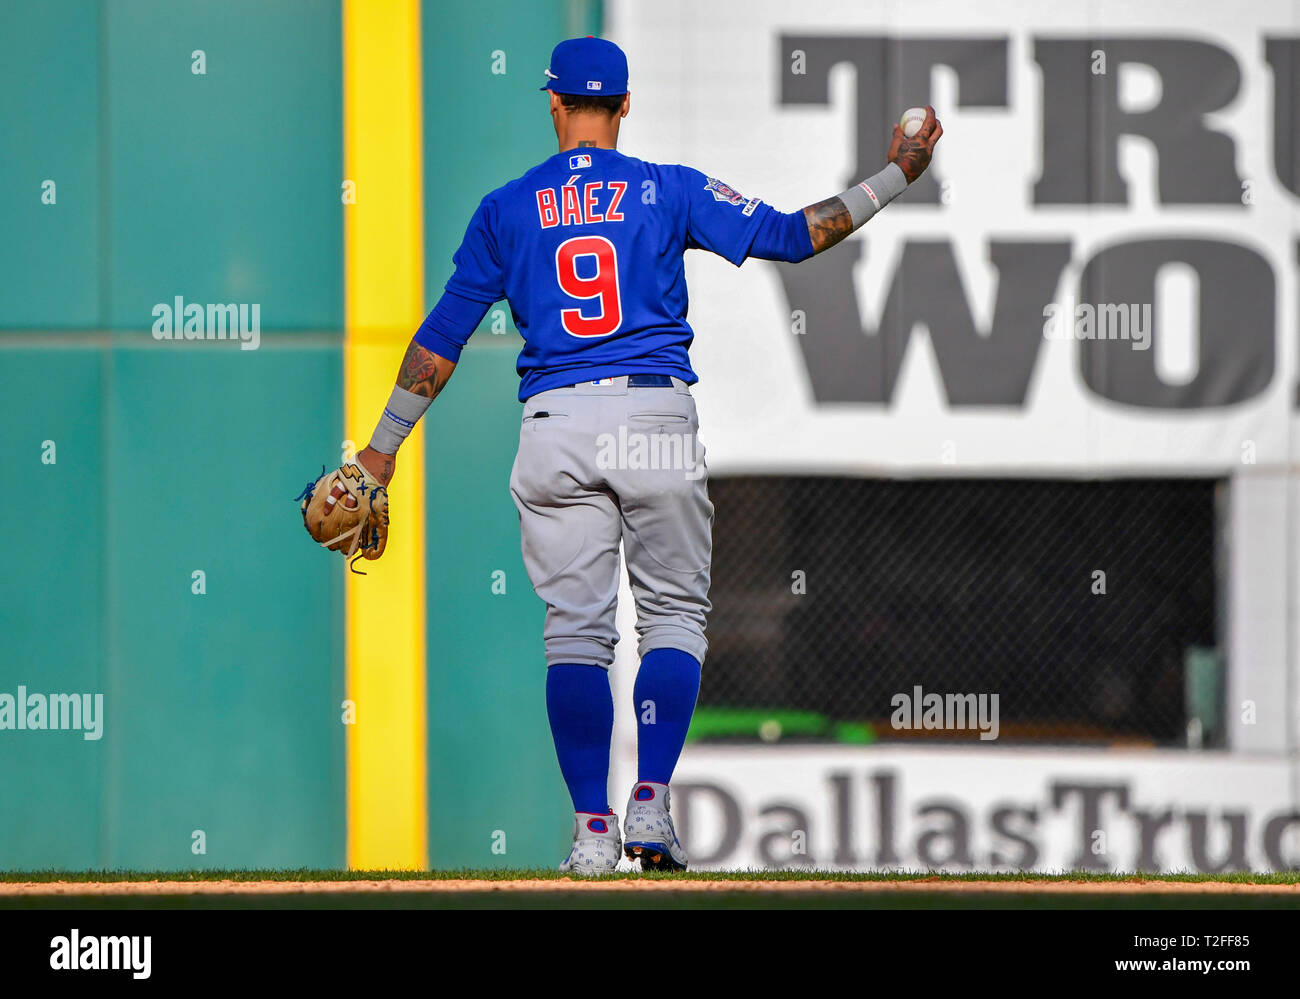 Mar 31, 2019: Chicago Cubs shortstop Javier Baez #9 during an MLB